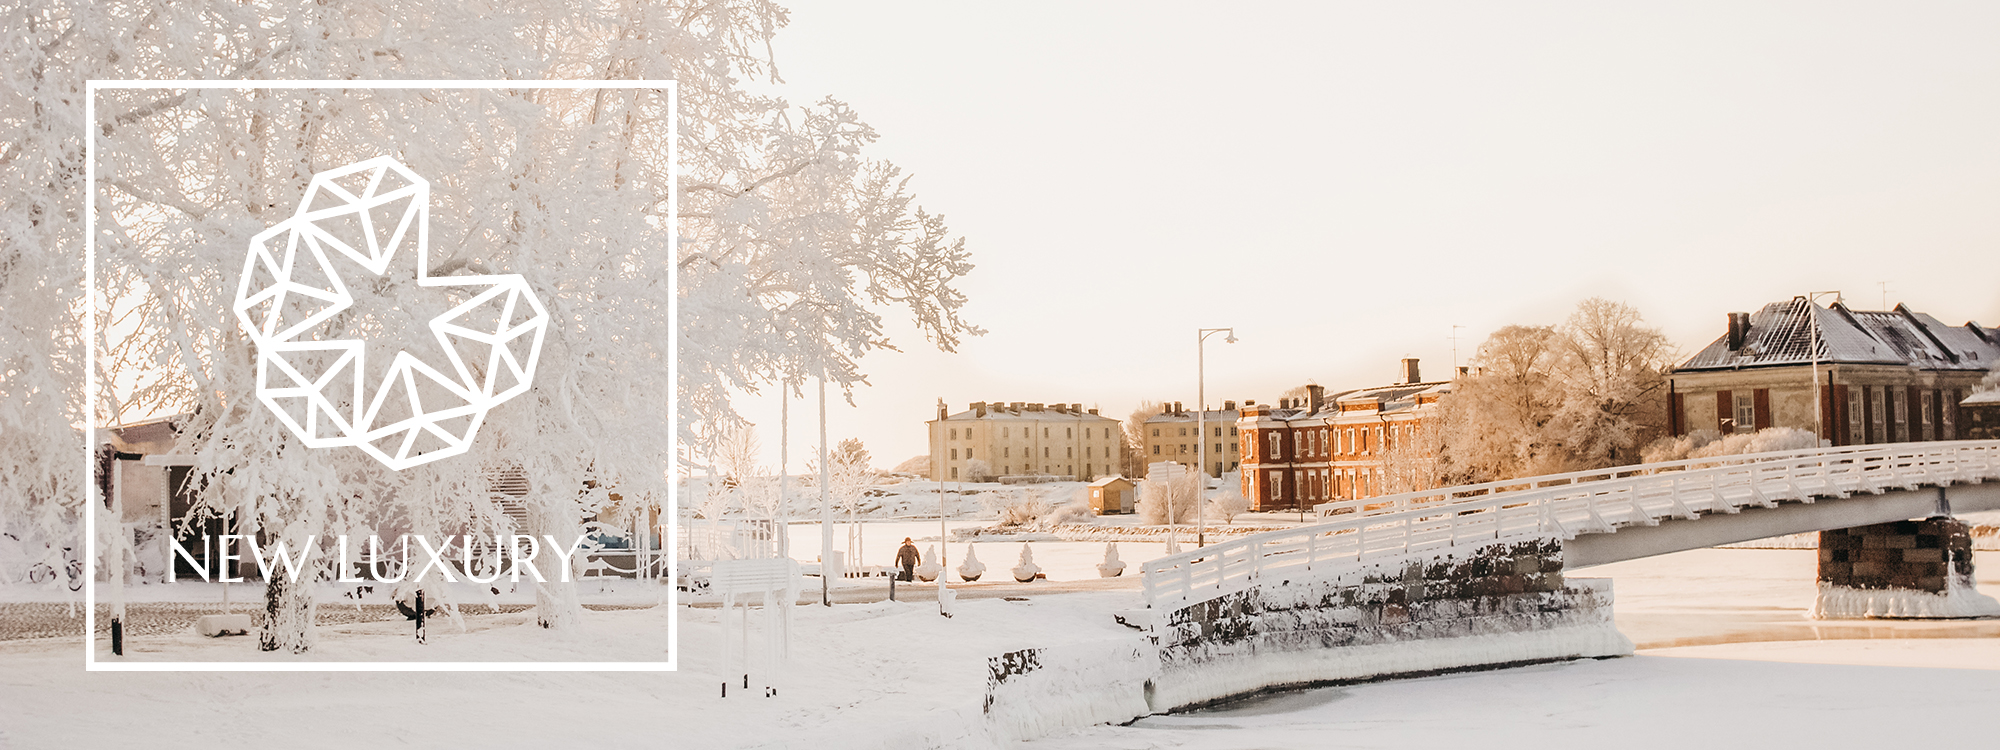 Suomenlinna talvella. Kuva: Emilia Hoisko, Visit Finland